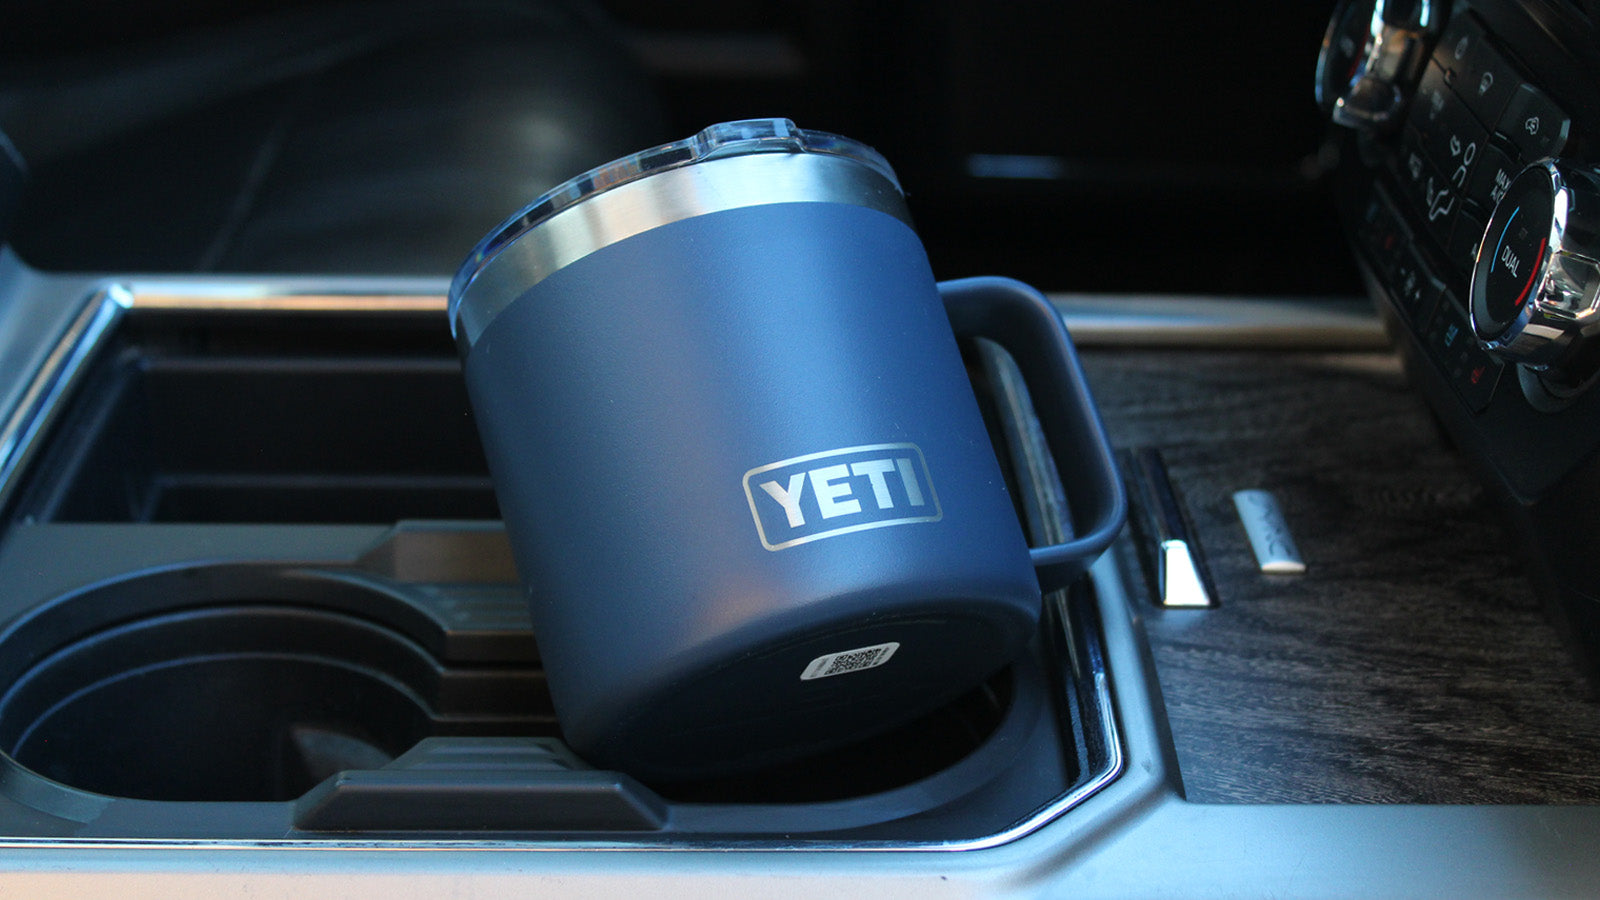 Cup holder insert for yeti rambler 14 oz mug : r/ToyotaTacoma